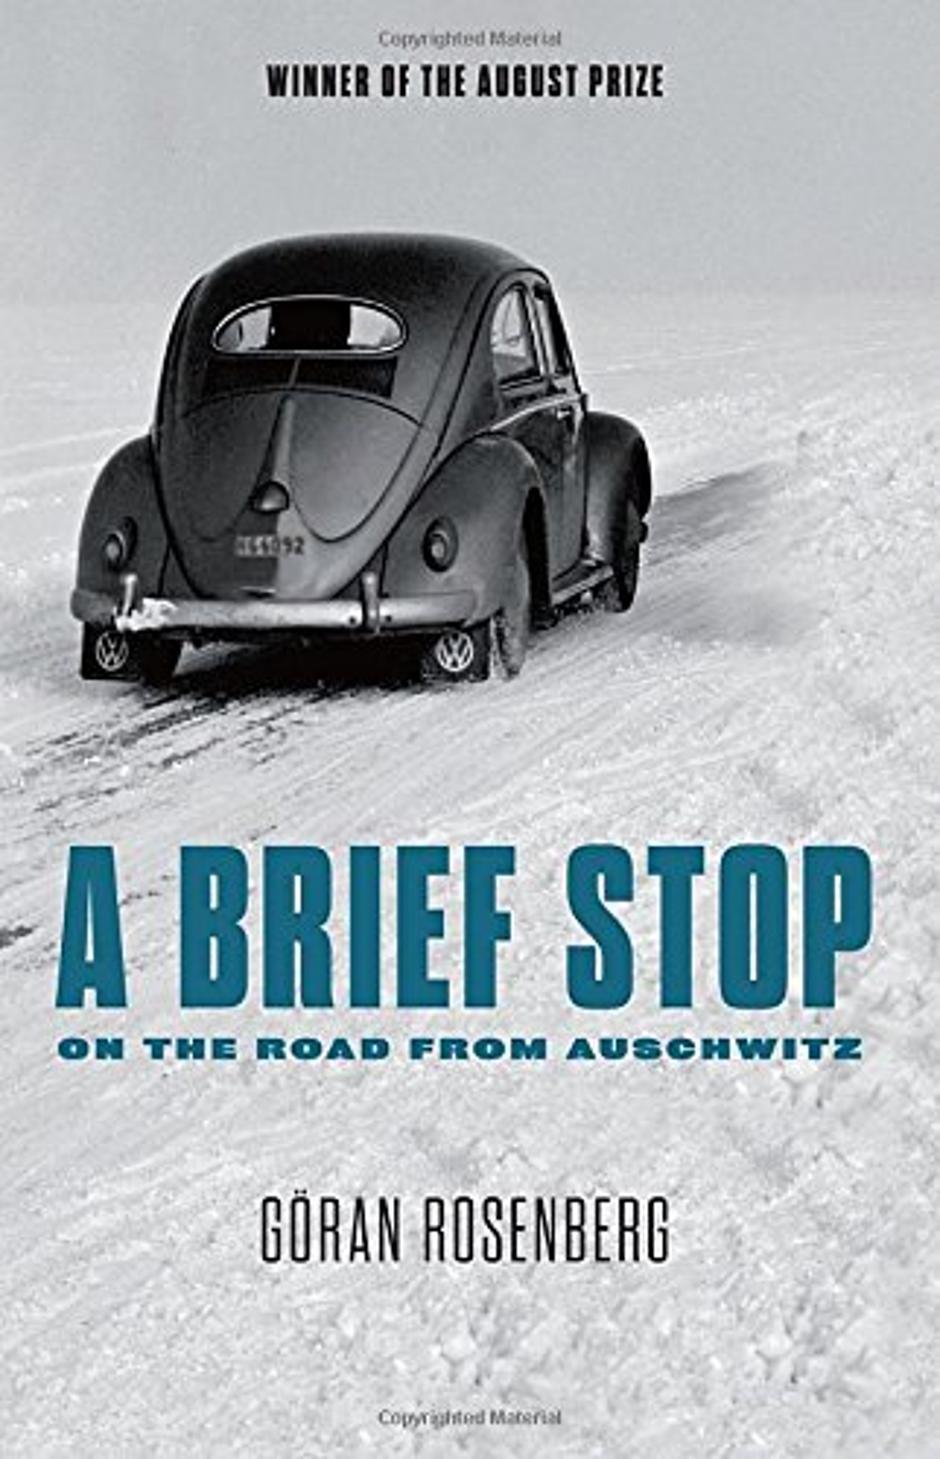 A brief stop | Author: amazon